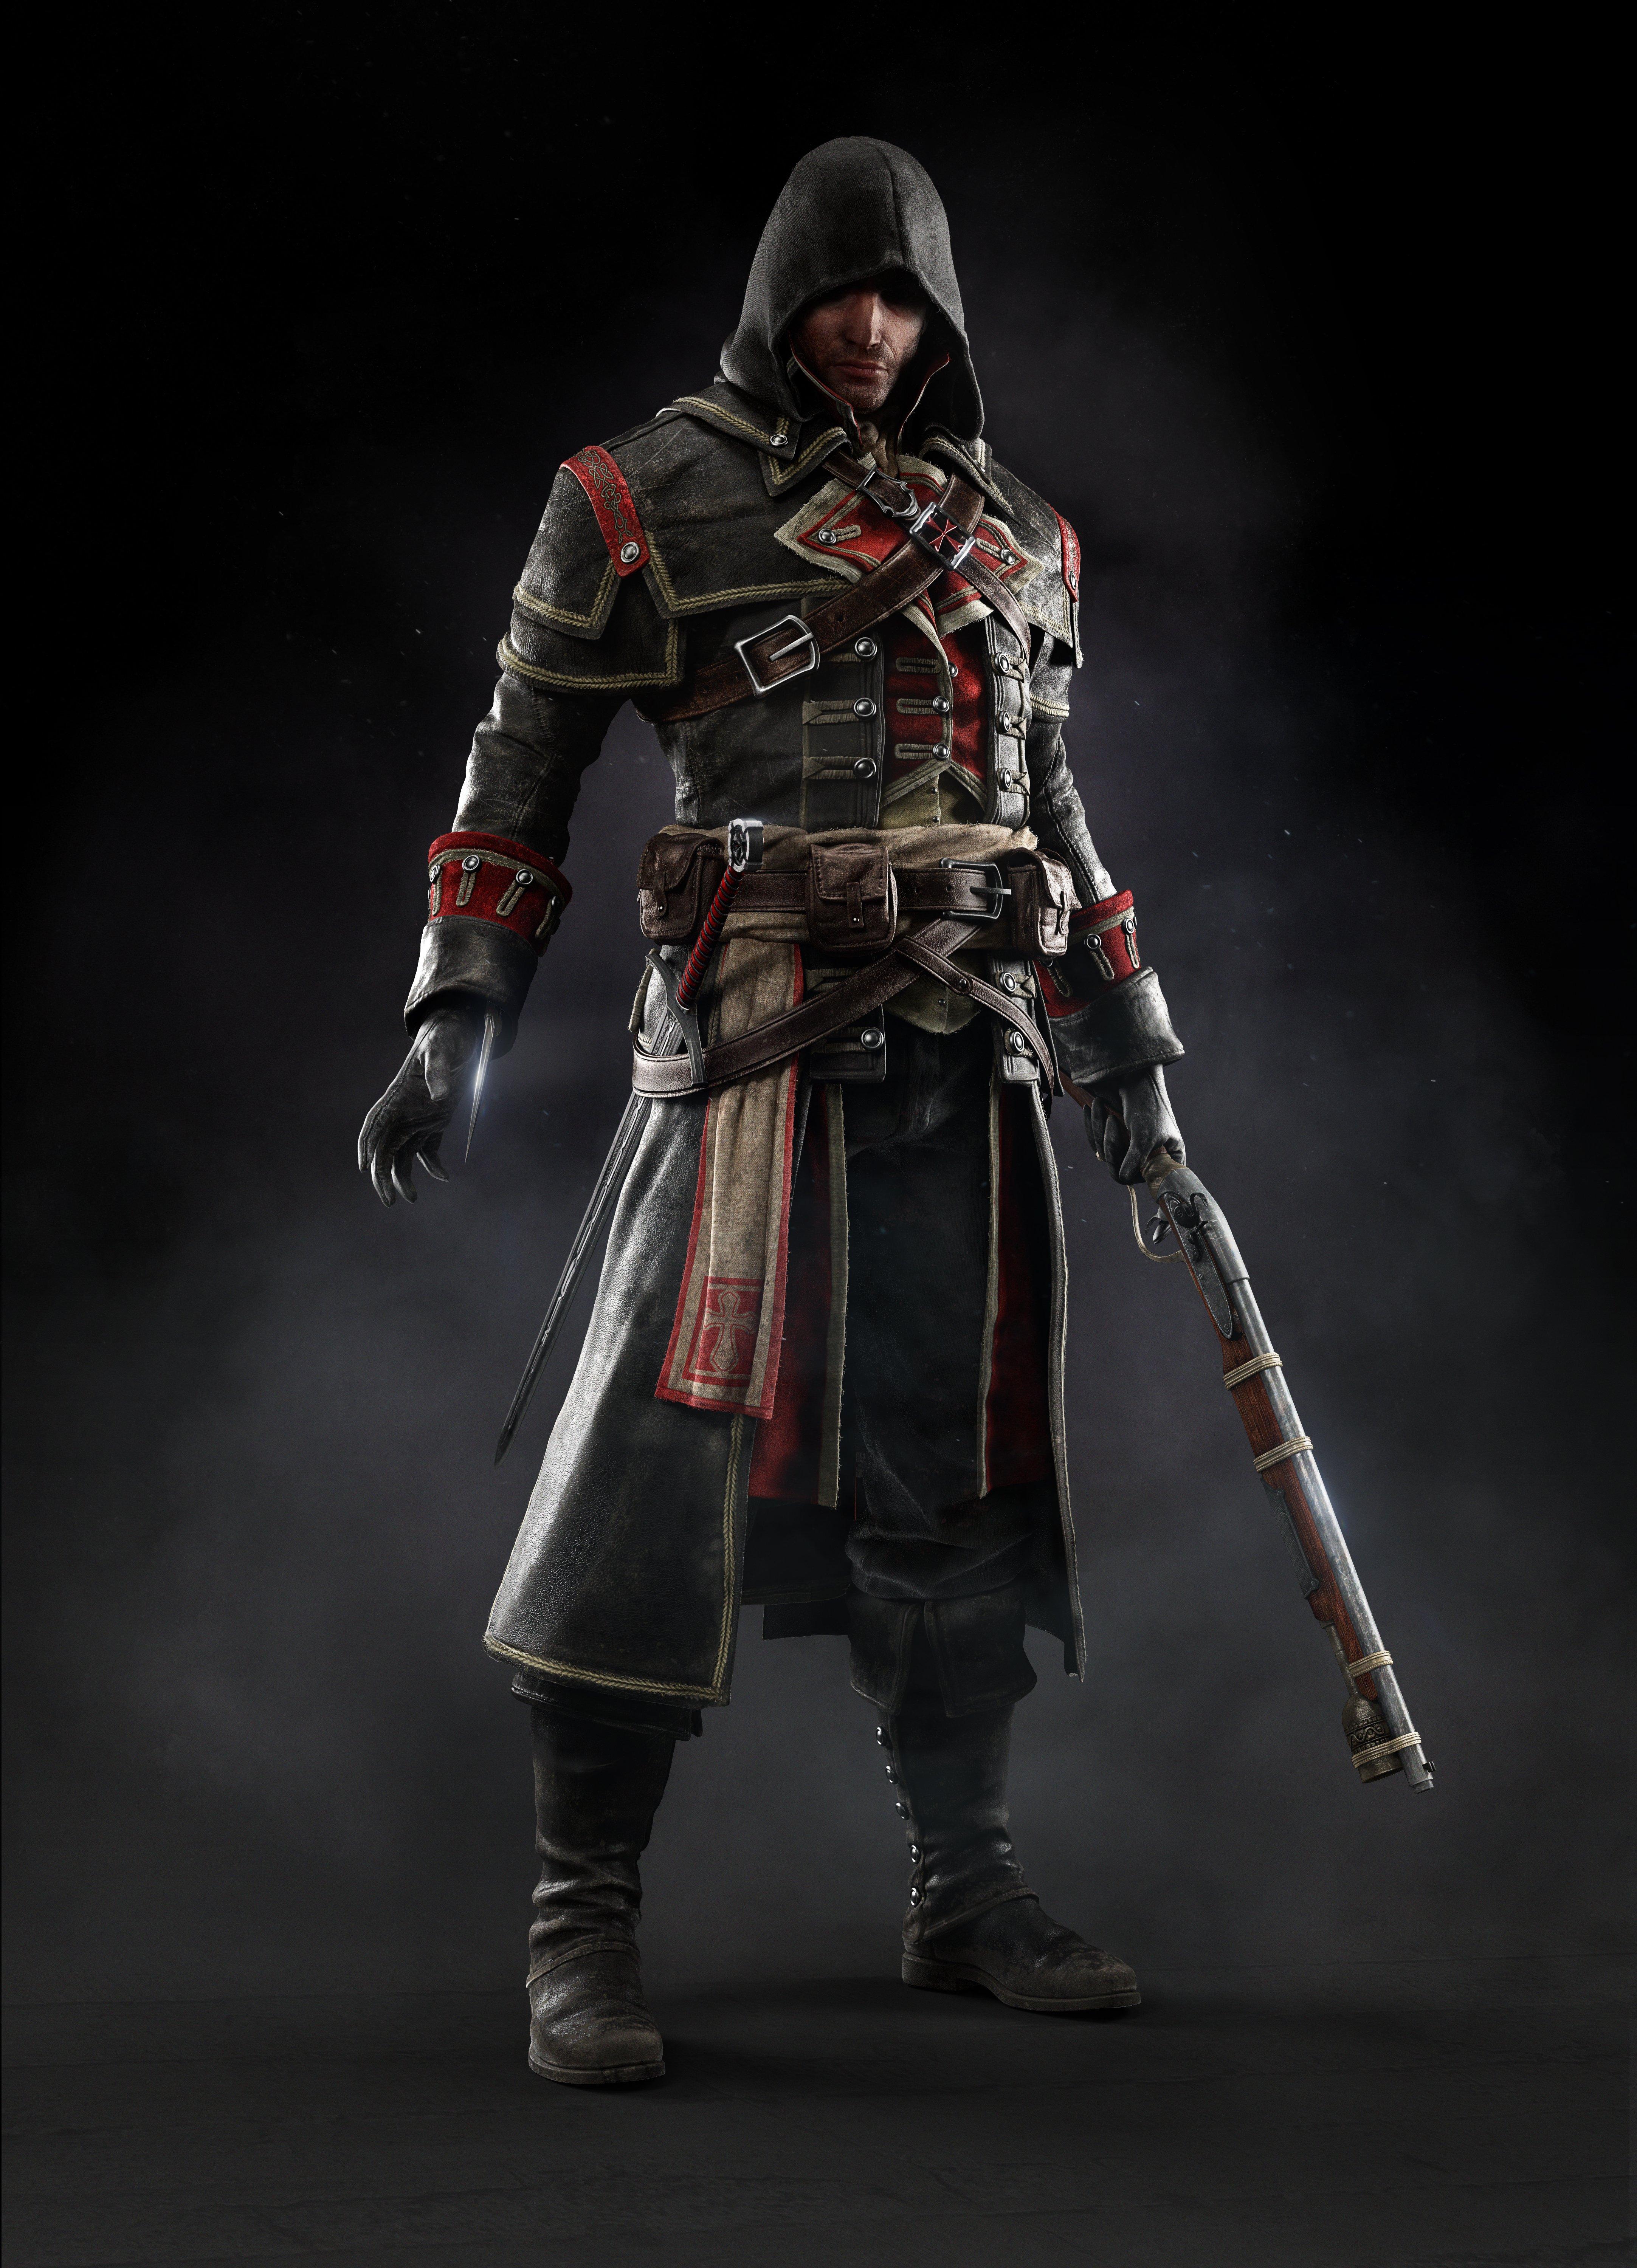 Assassin's Creed Rogue - Xbox 360